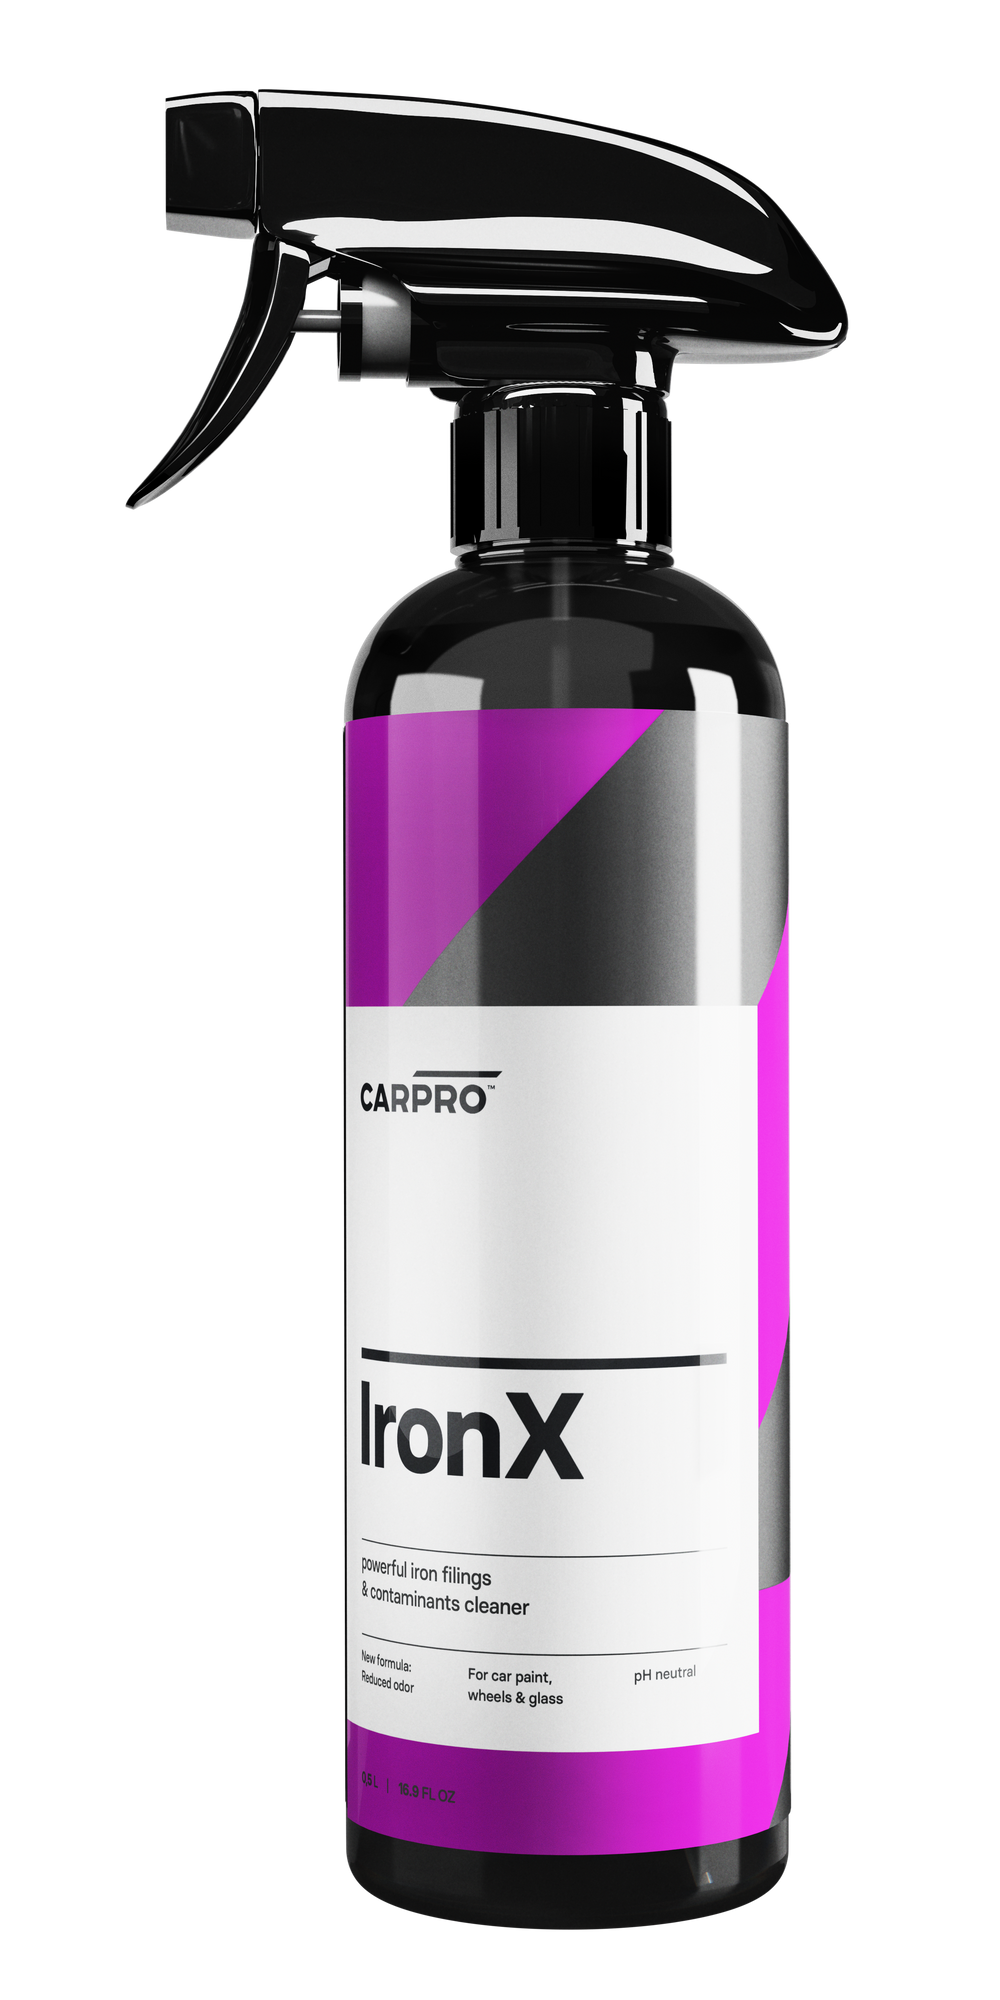 CARPRO IronX 500ml - Iron filings and contaminants cleaner